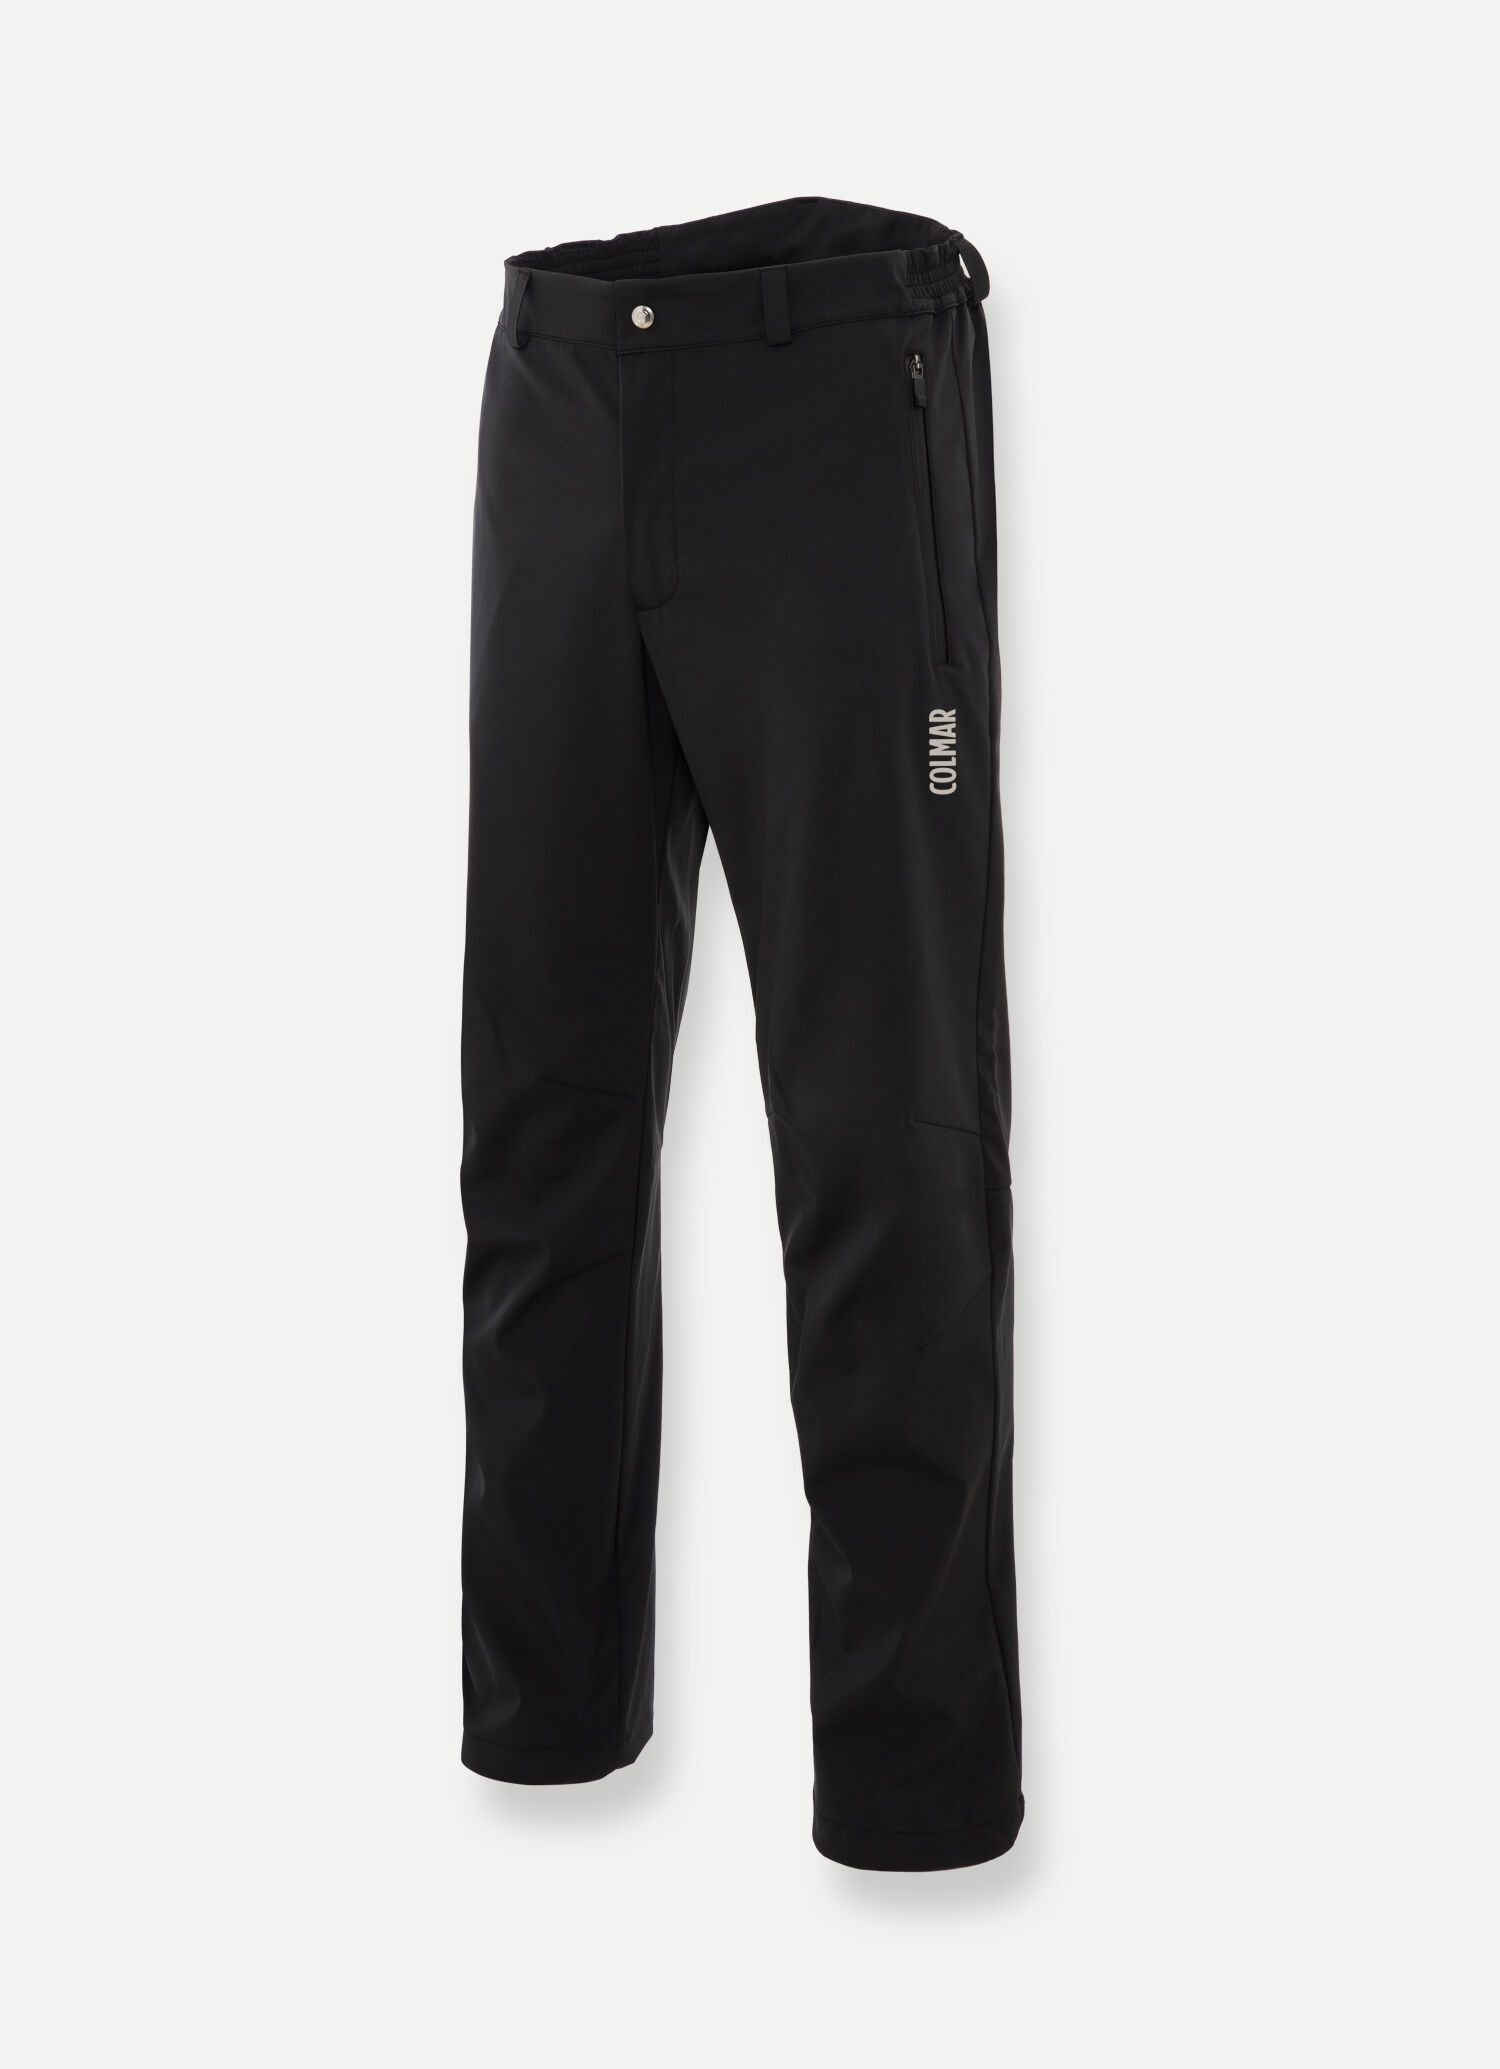 Jump pro - Black - Black waterproof ski trousers - Molo